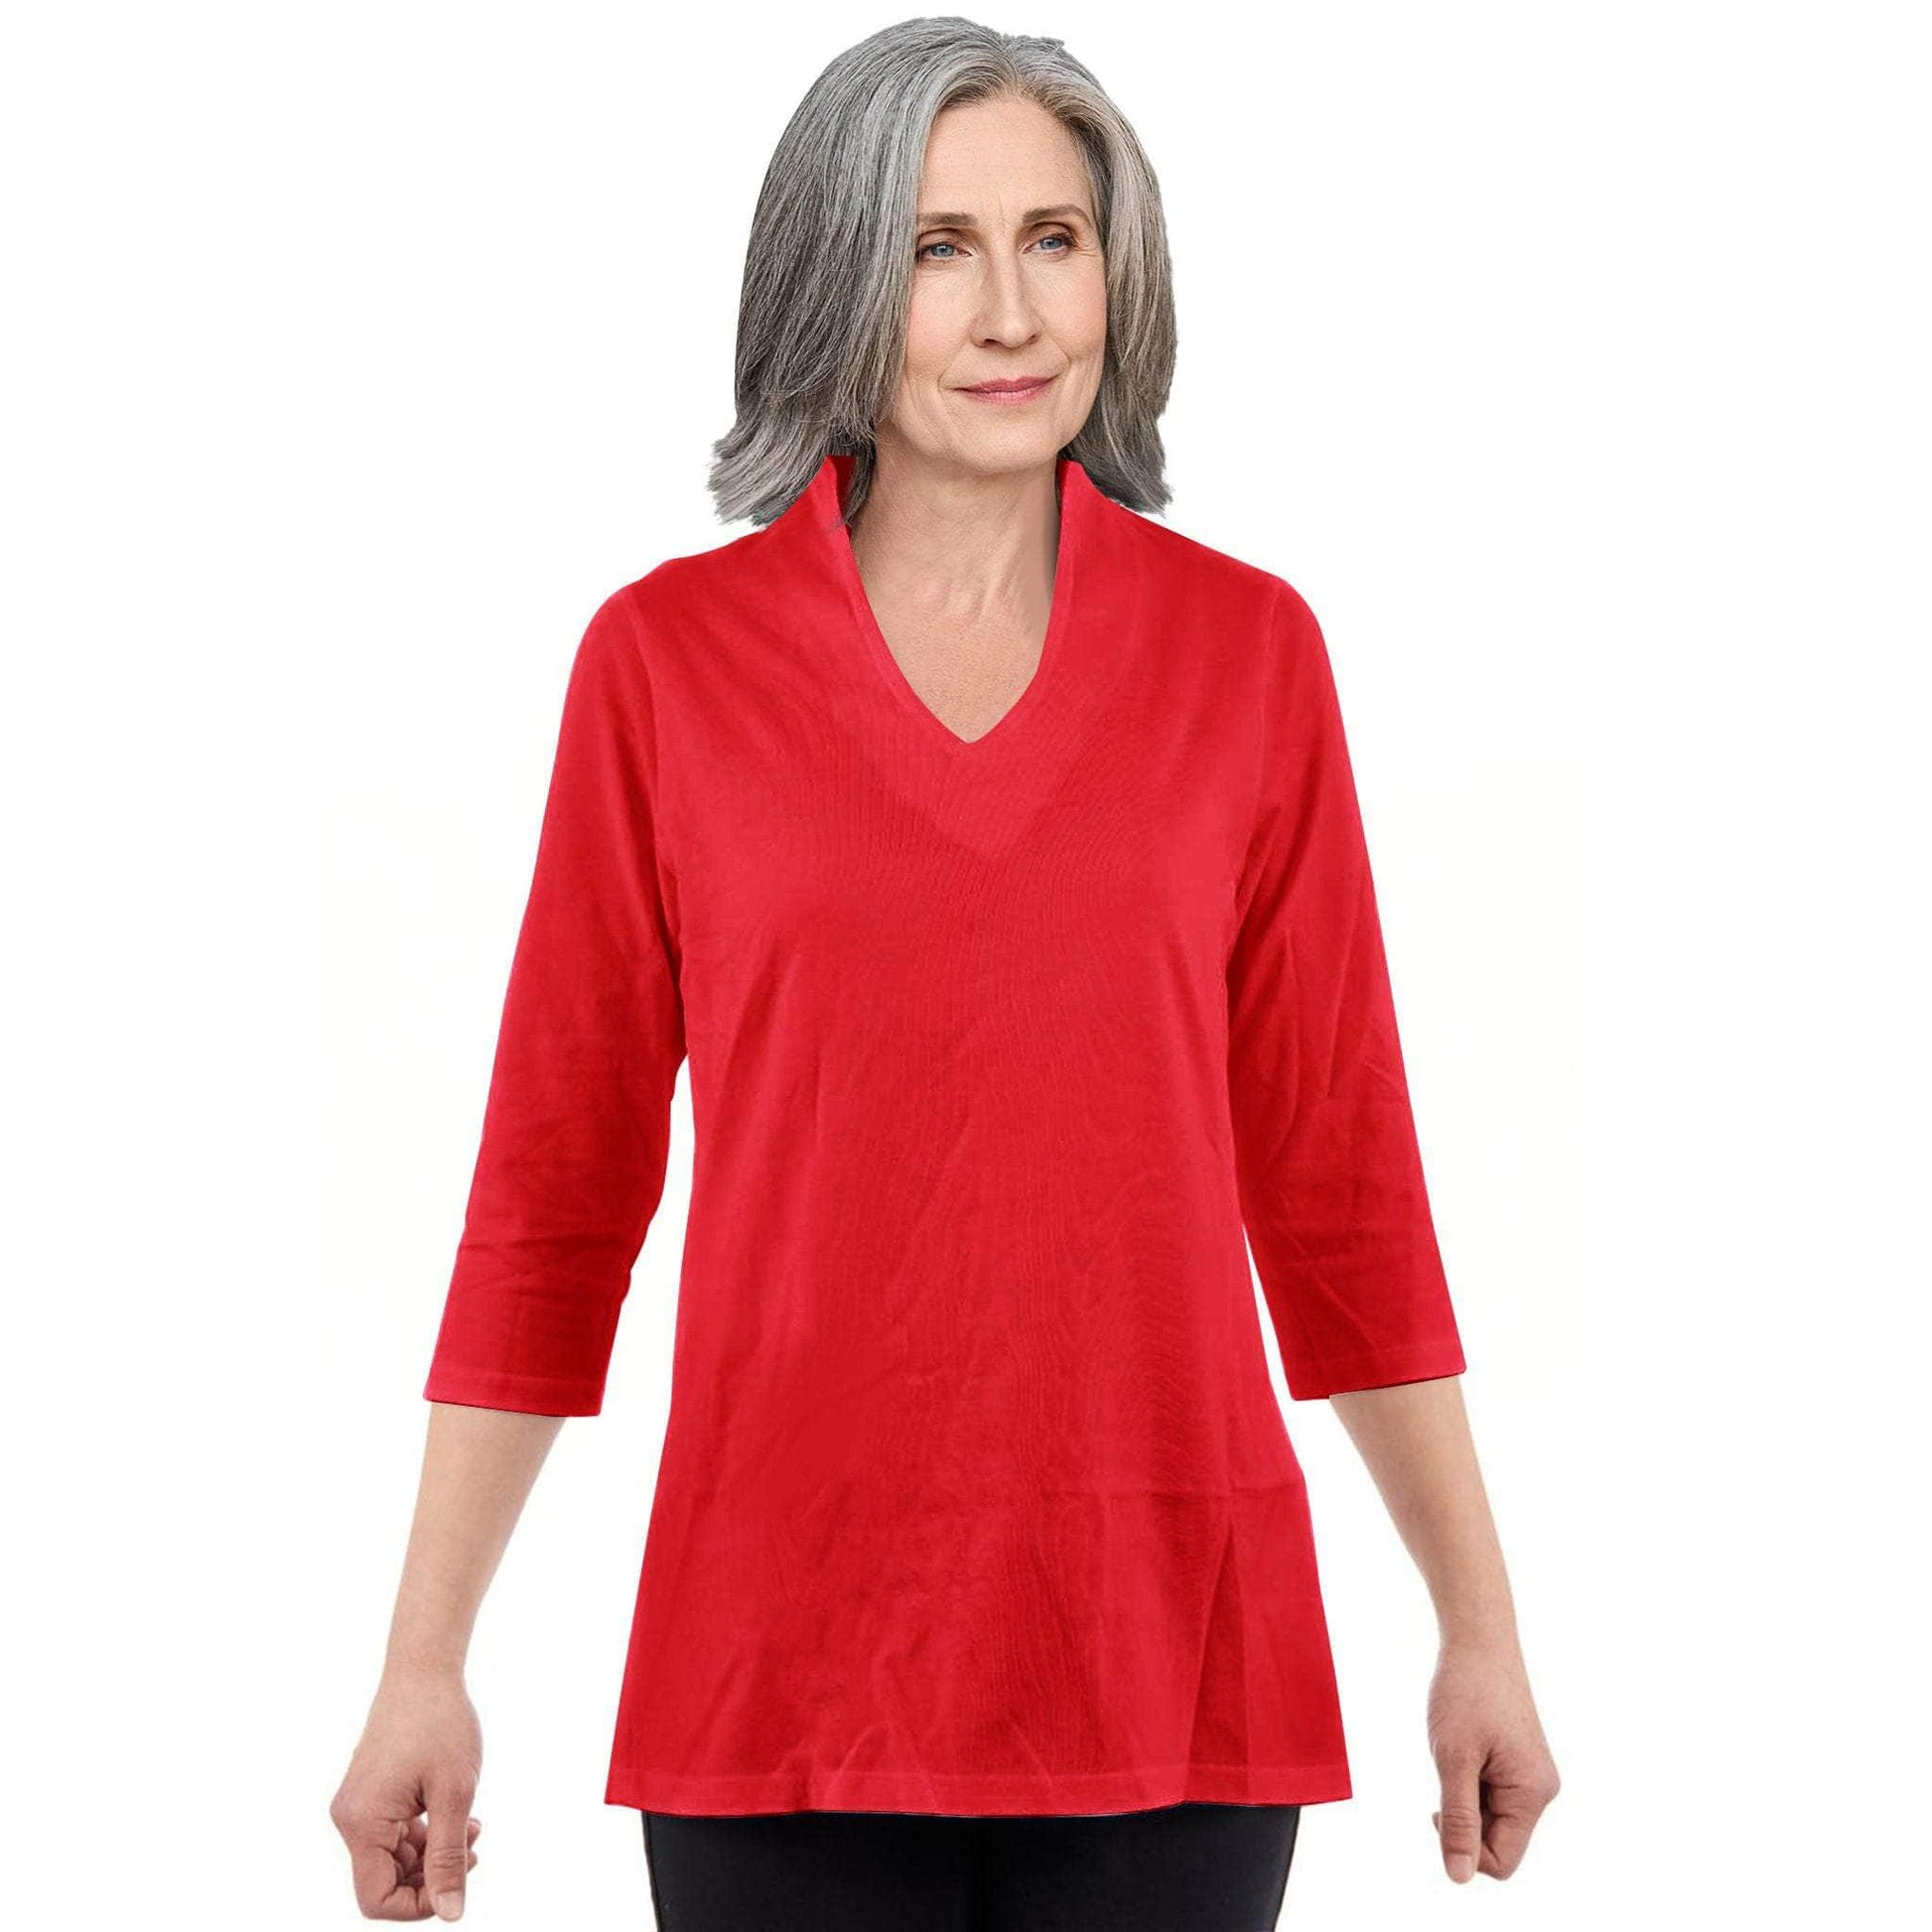 CC Women's Elizabeth 3/4 Sleeve V-Neck Top - Red - Caring Clothing